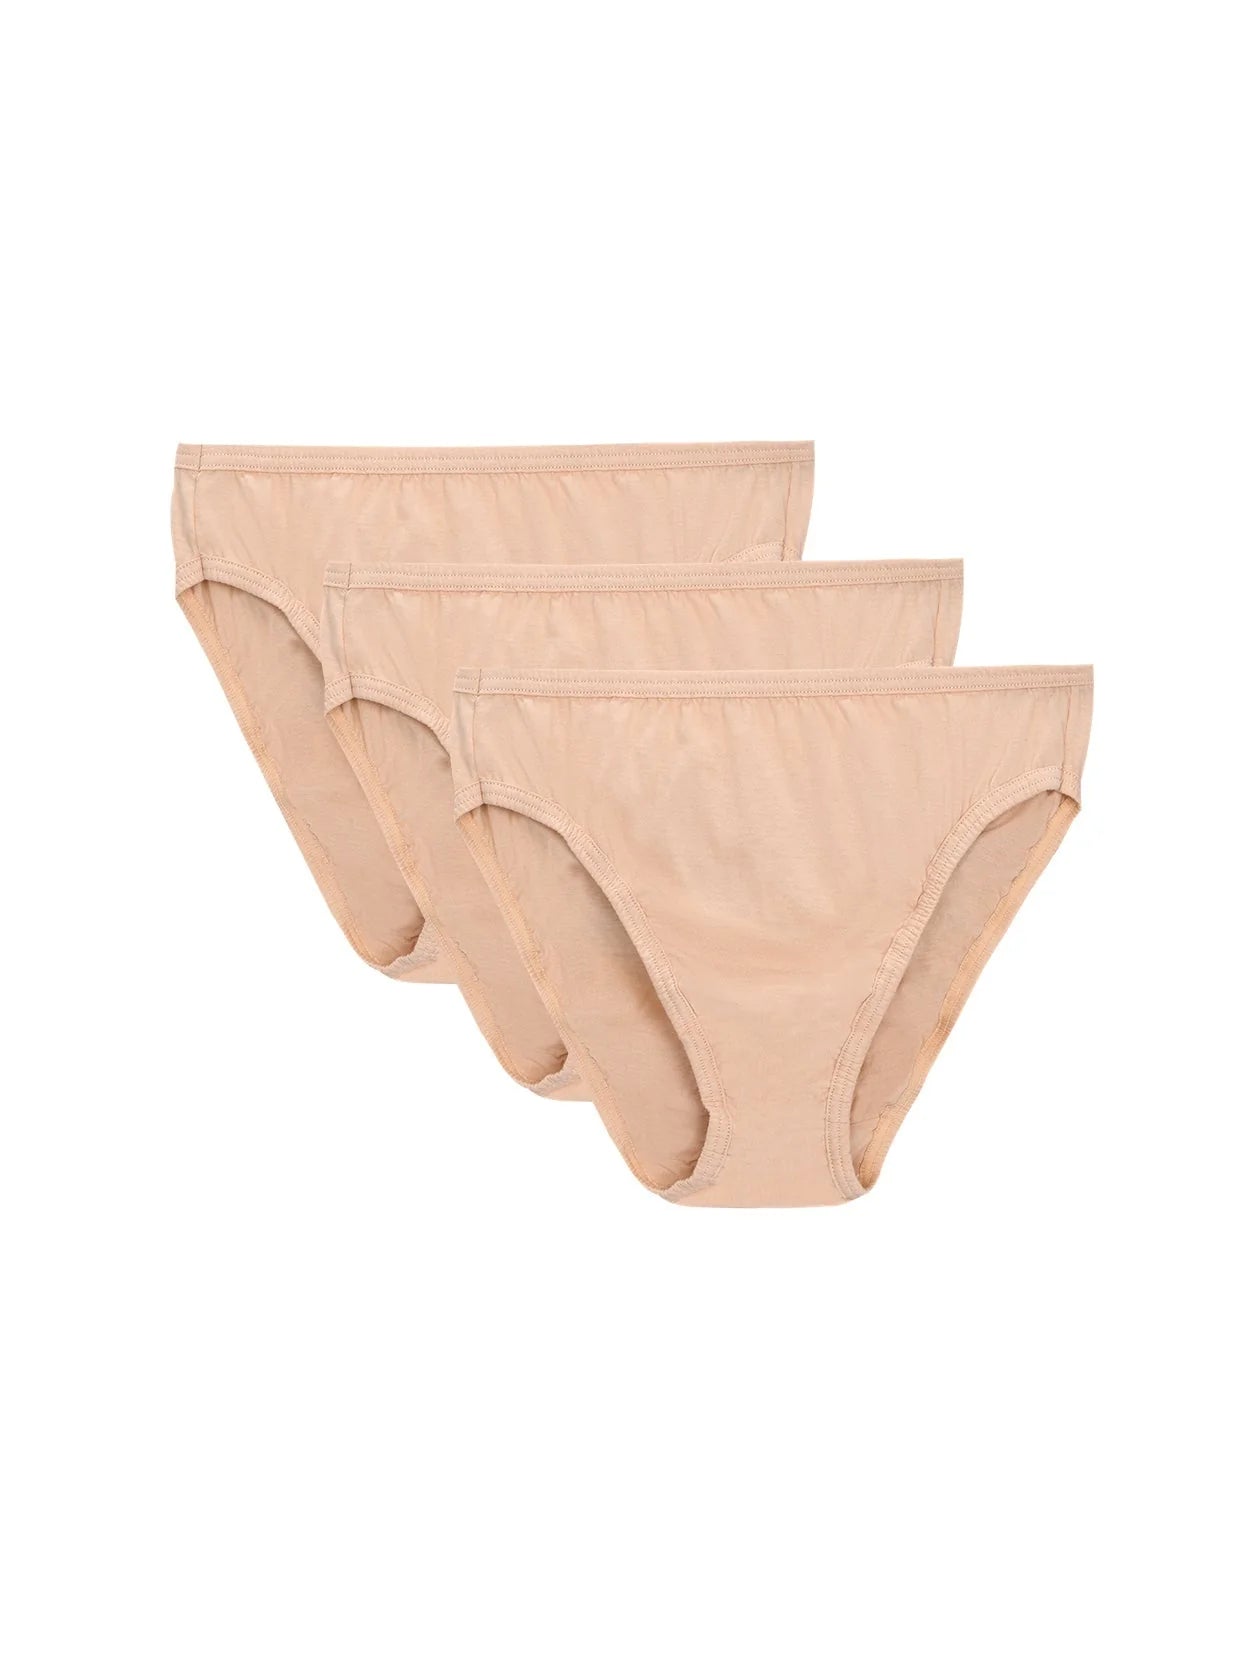 High-Cut Brief Cotton Plus Size Underwear 3 PCS White Pink Nude